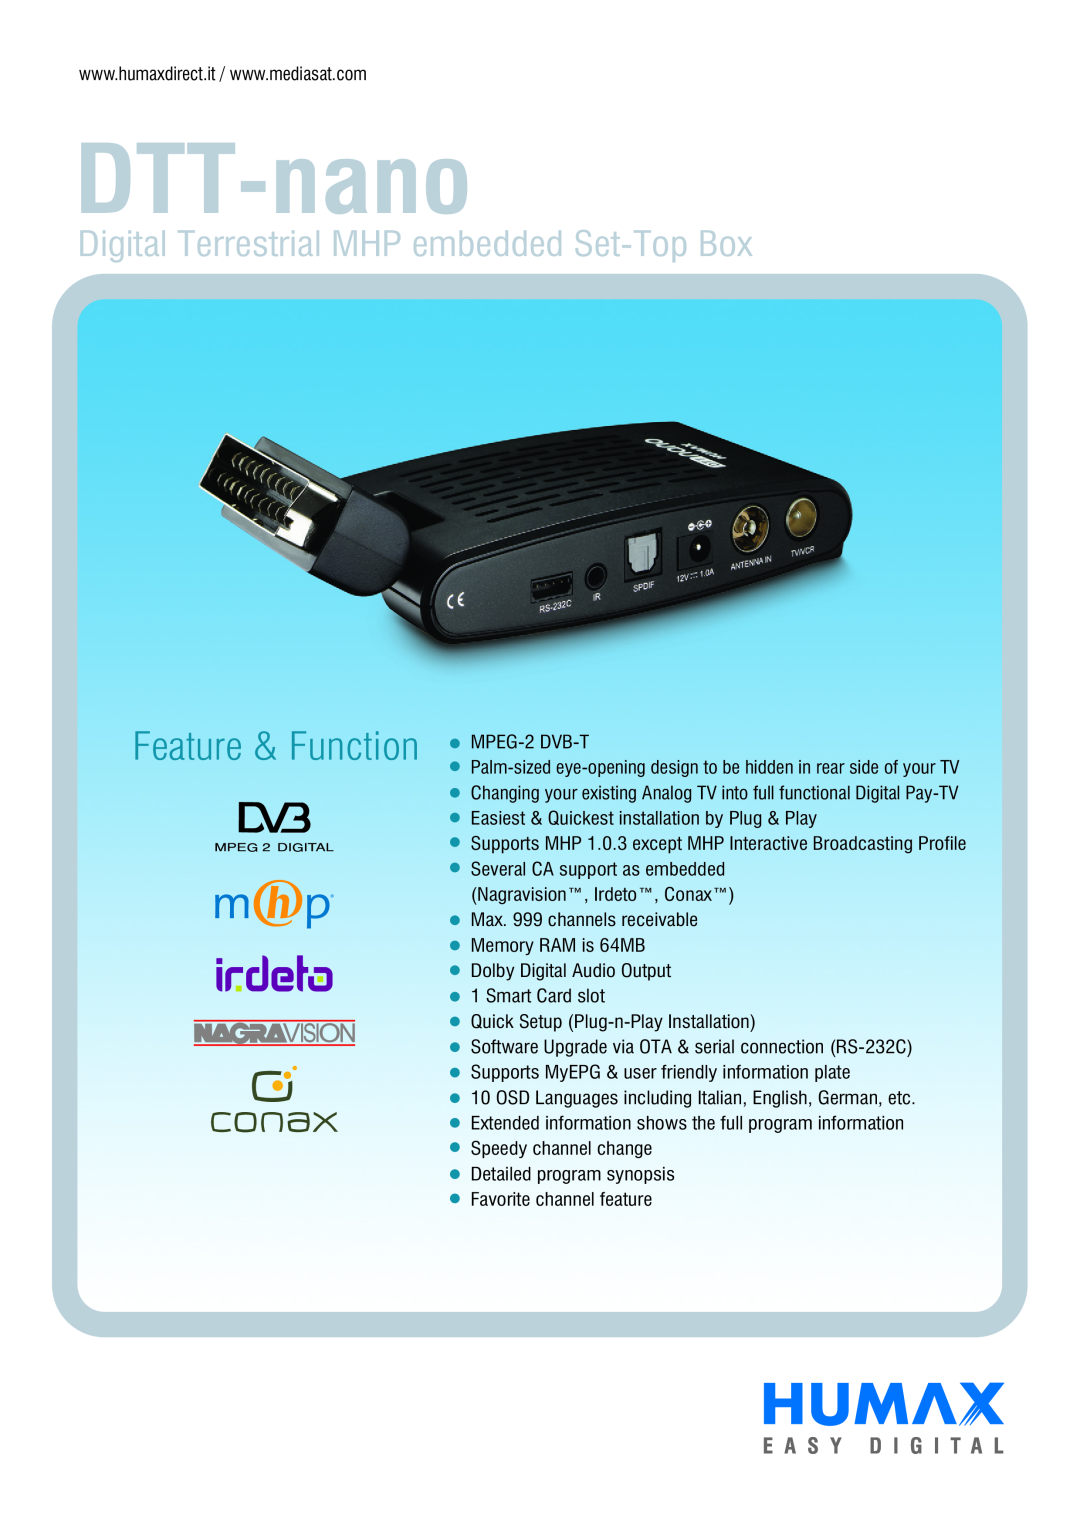 Humax DTT-nano manual Feature & Function, Digital Terrestrial MHP embedded Set-Top Box 